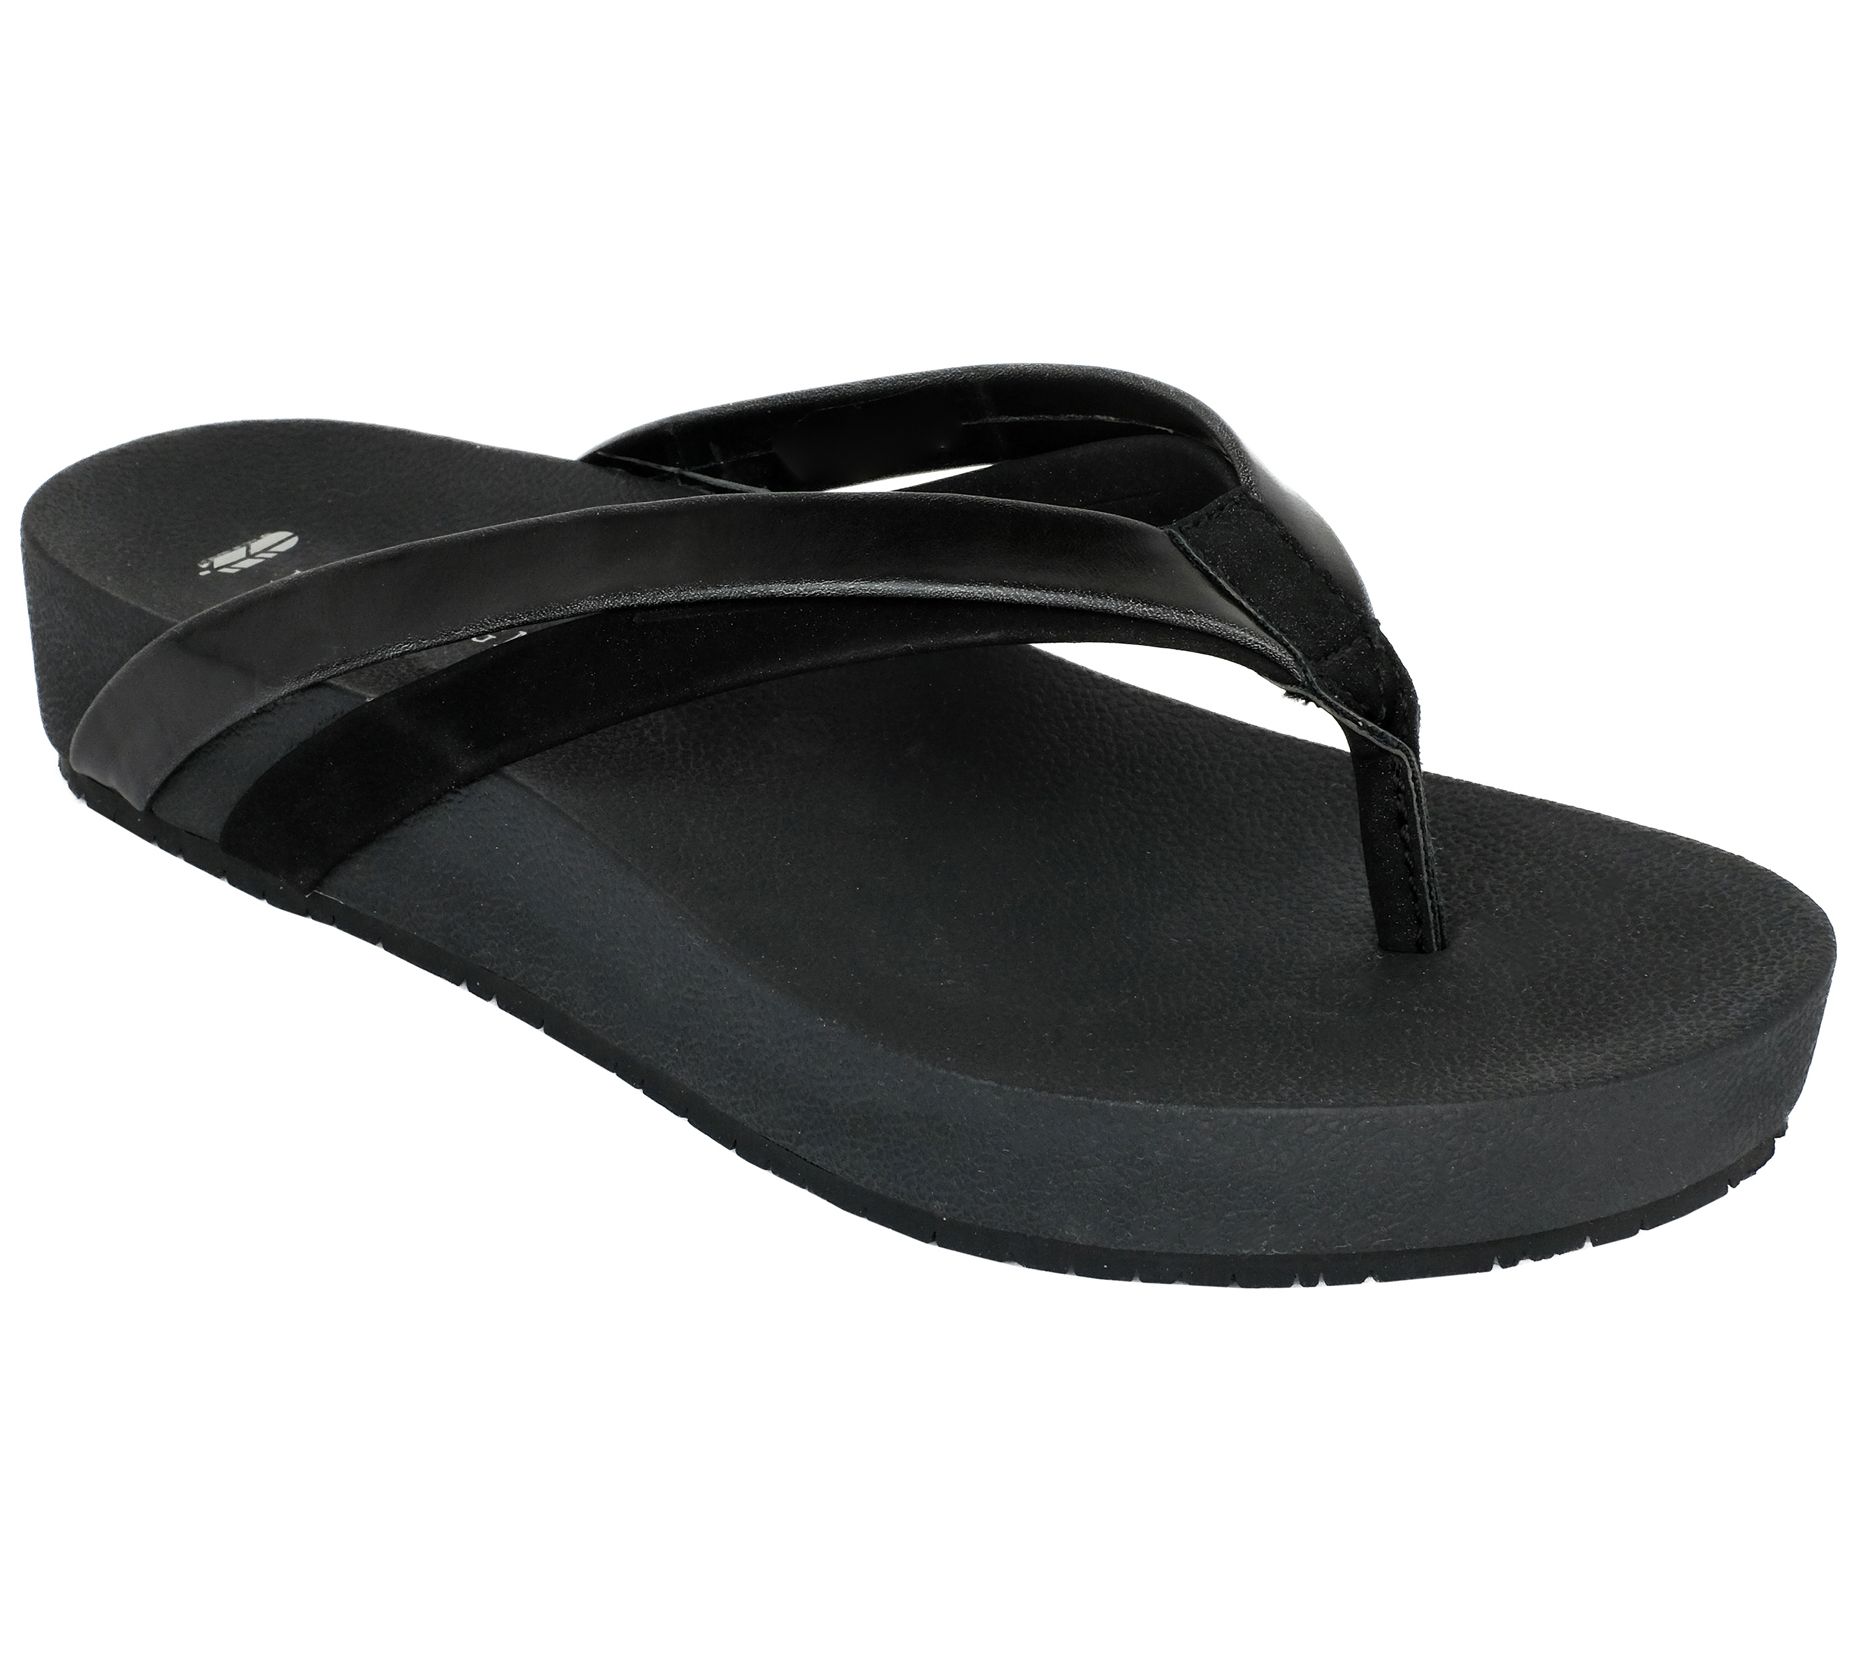 Revitalign Orthotic Flip Flop Sandals - Sandy Seas Beach - QVC.com